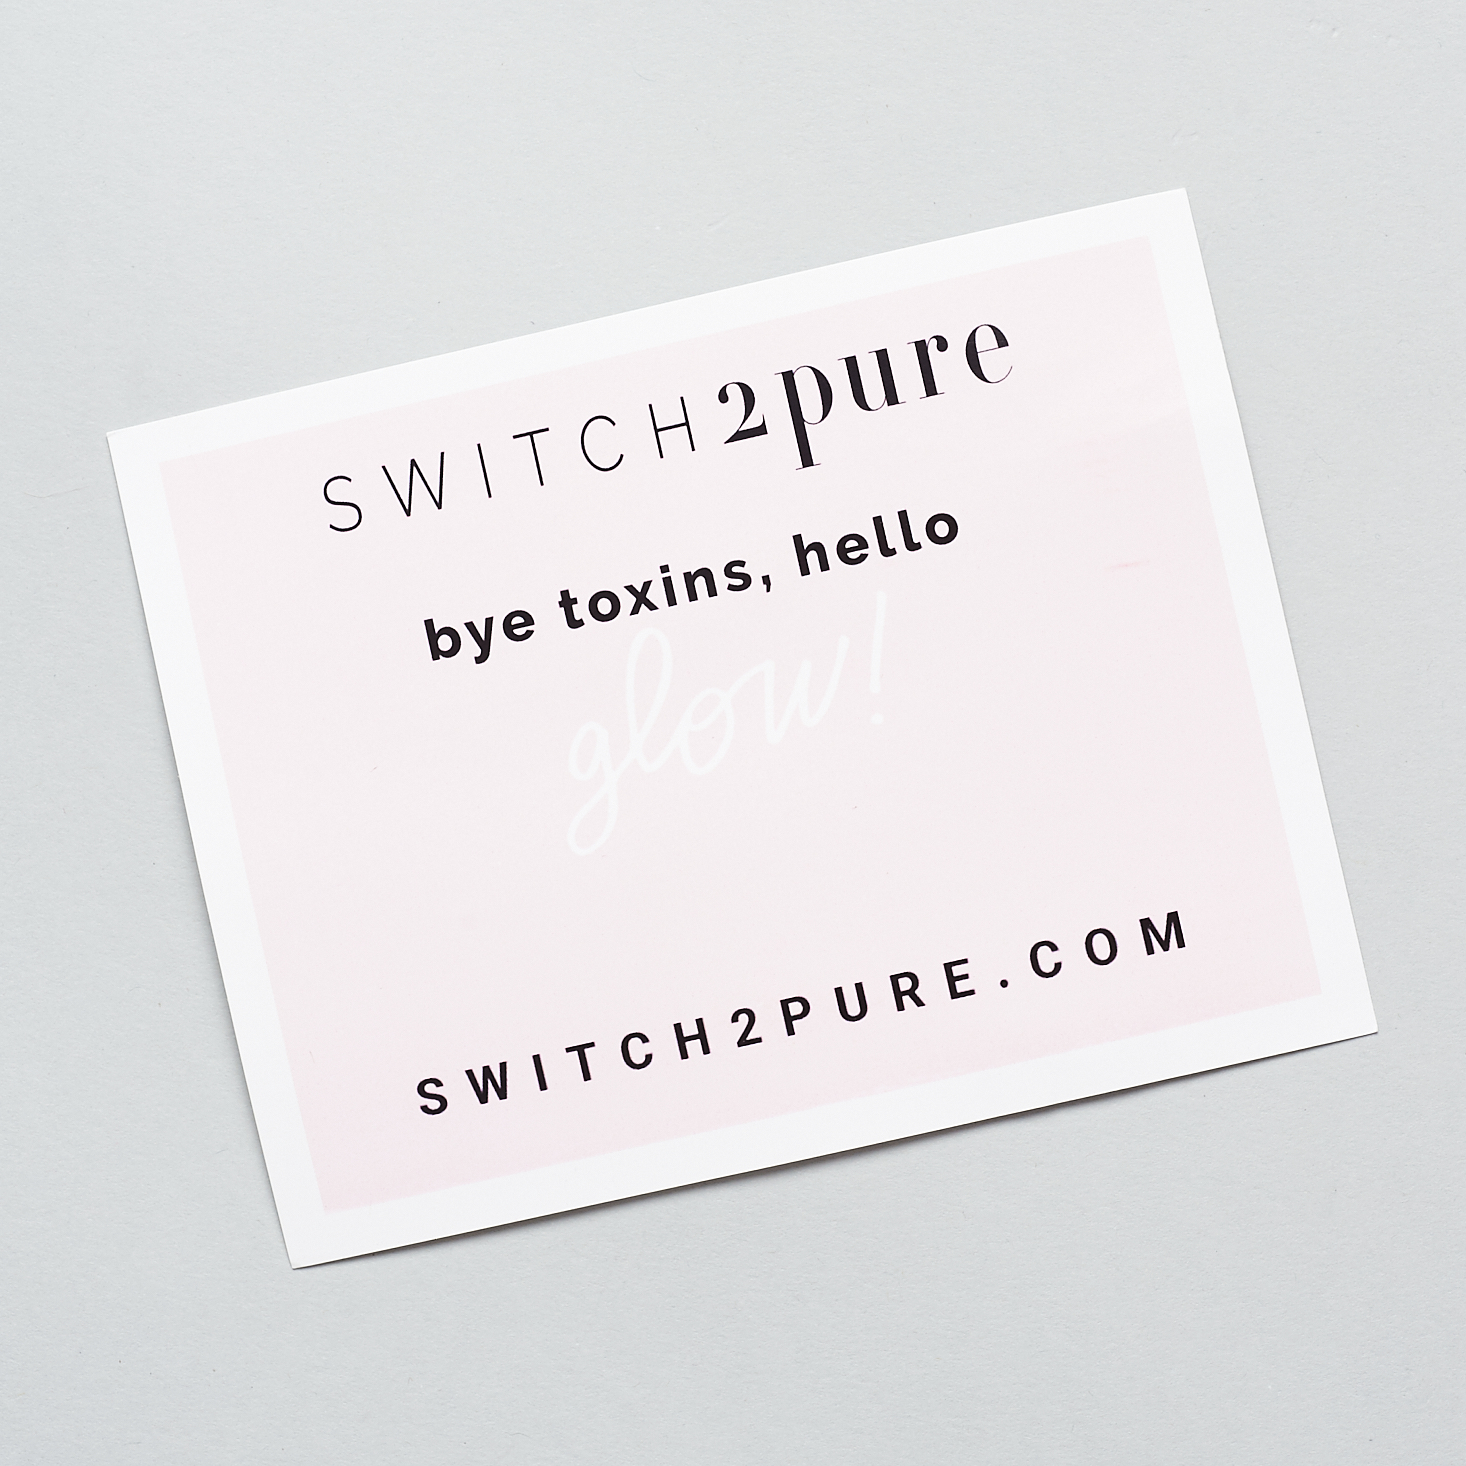 Switch 2 Pure branded czard